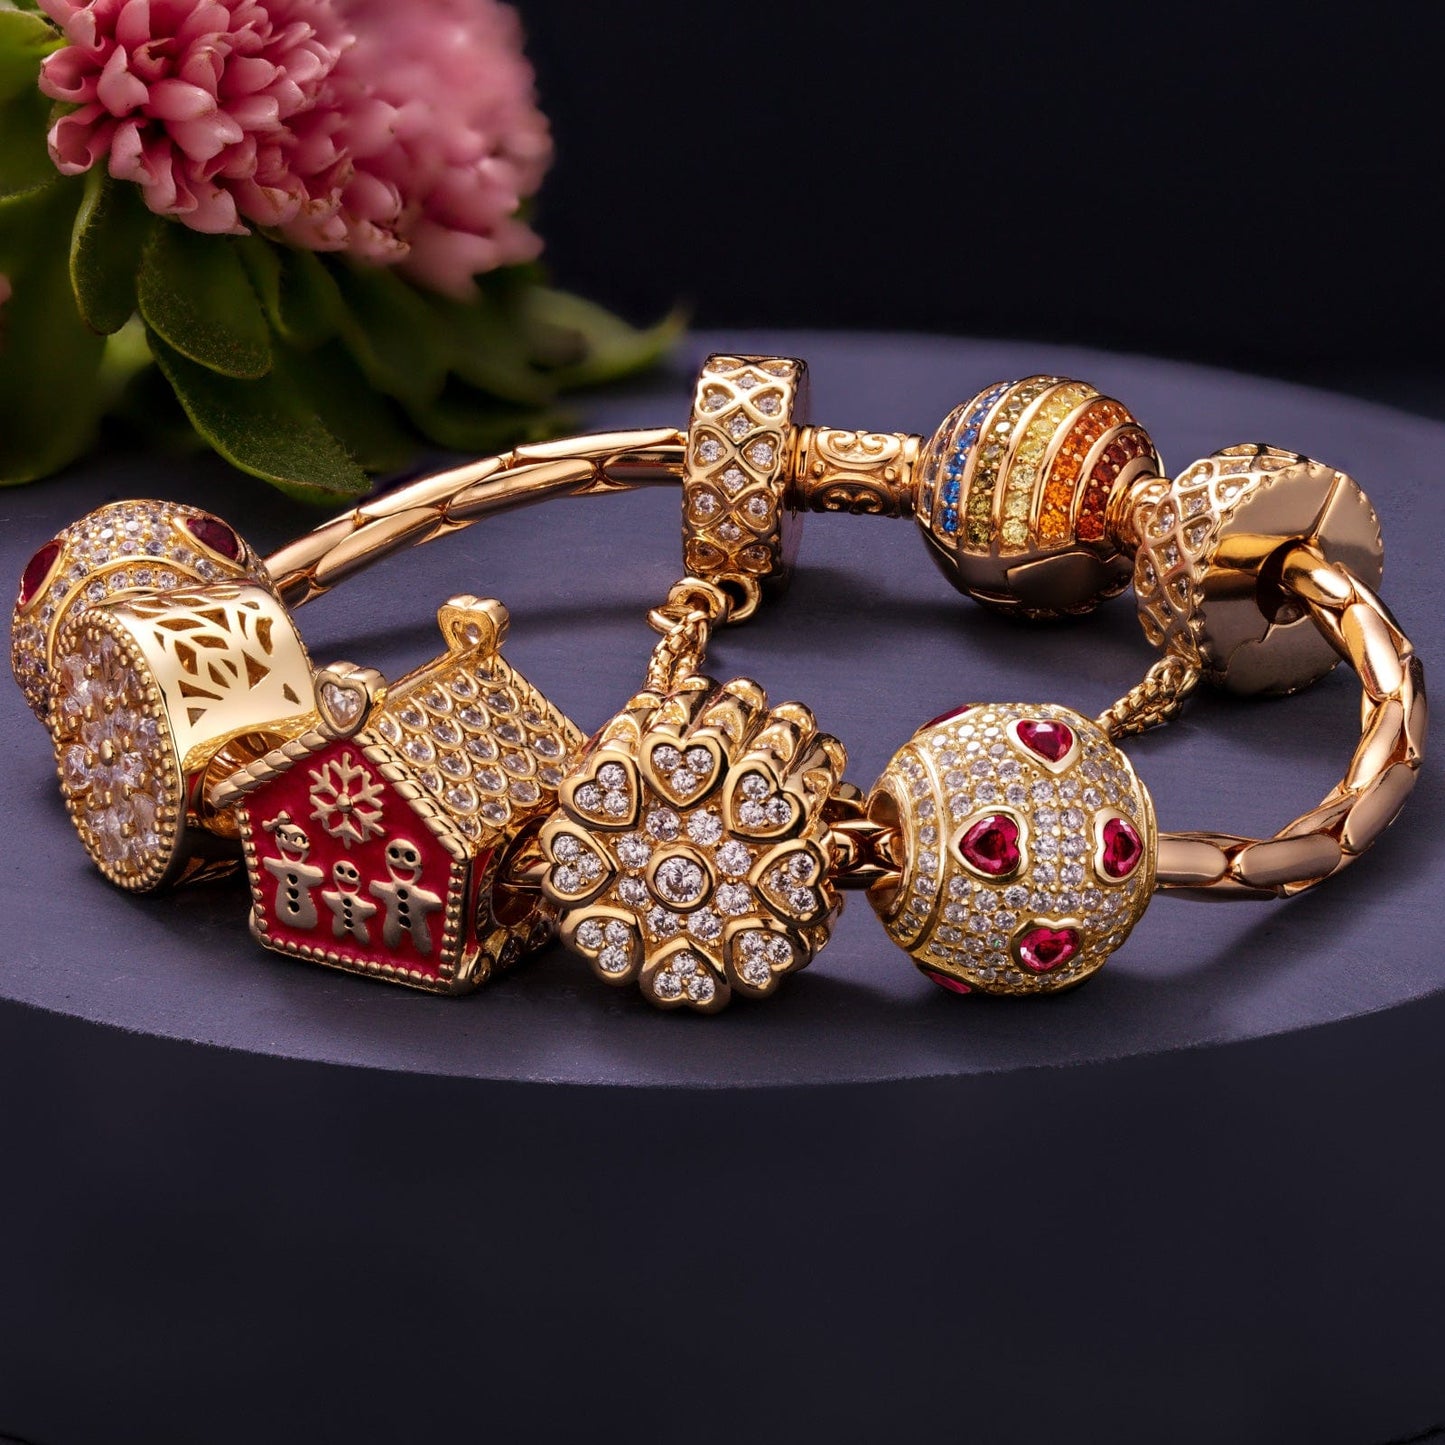 Sterling Silver Love Belonging Charms Bracelet Set With Enamel In 14K Gold Plated